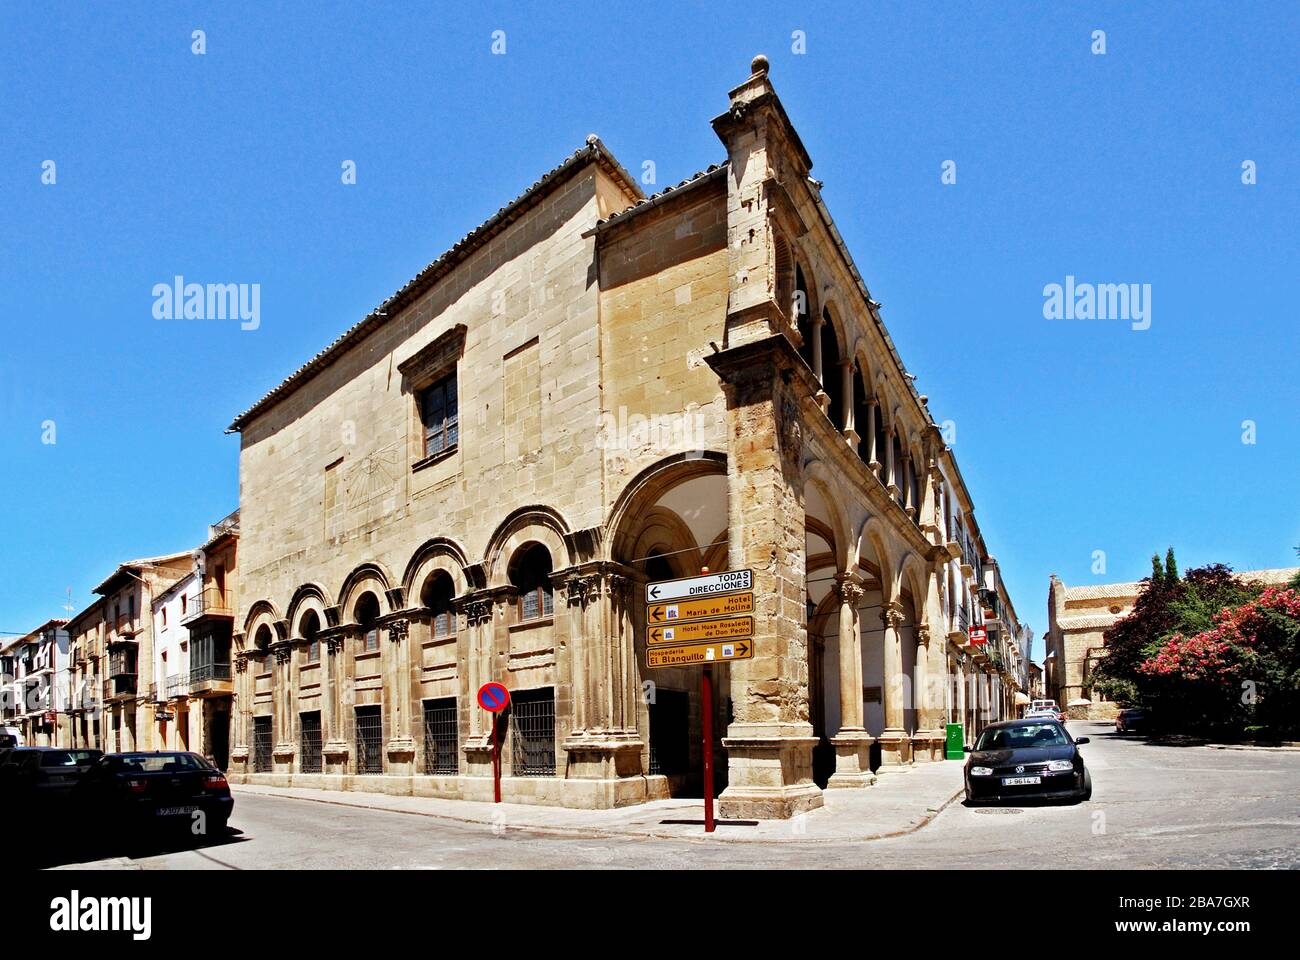 View of the old town hall (antiguas casas consistoriales) in the Plaza Primero de Mayo, Ubeda, Spain. Stock Photo